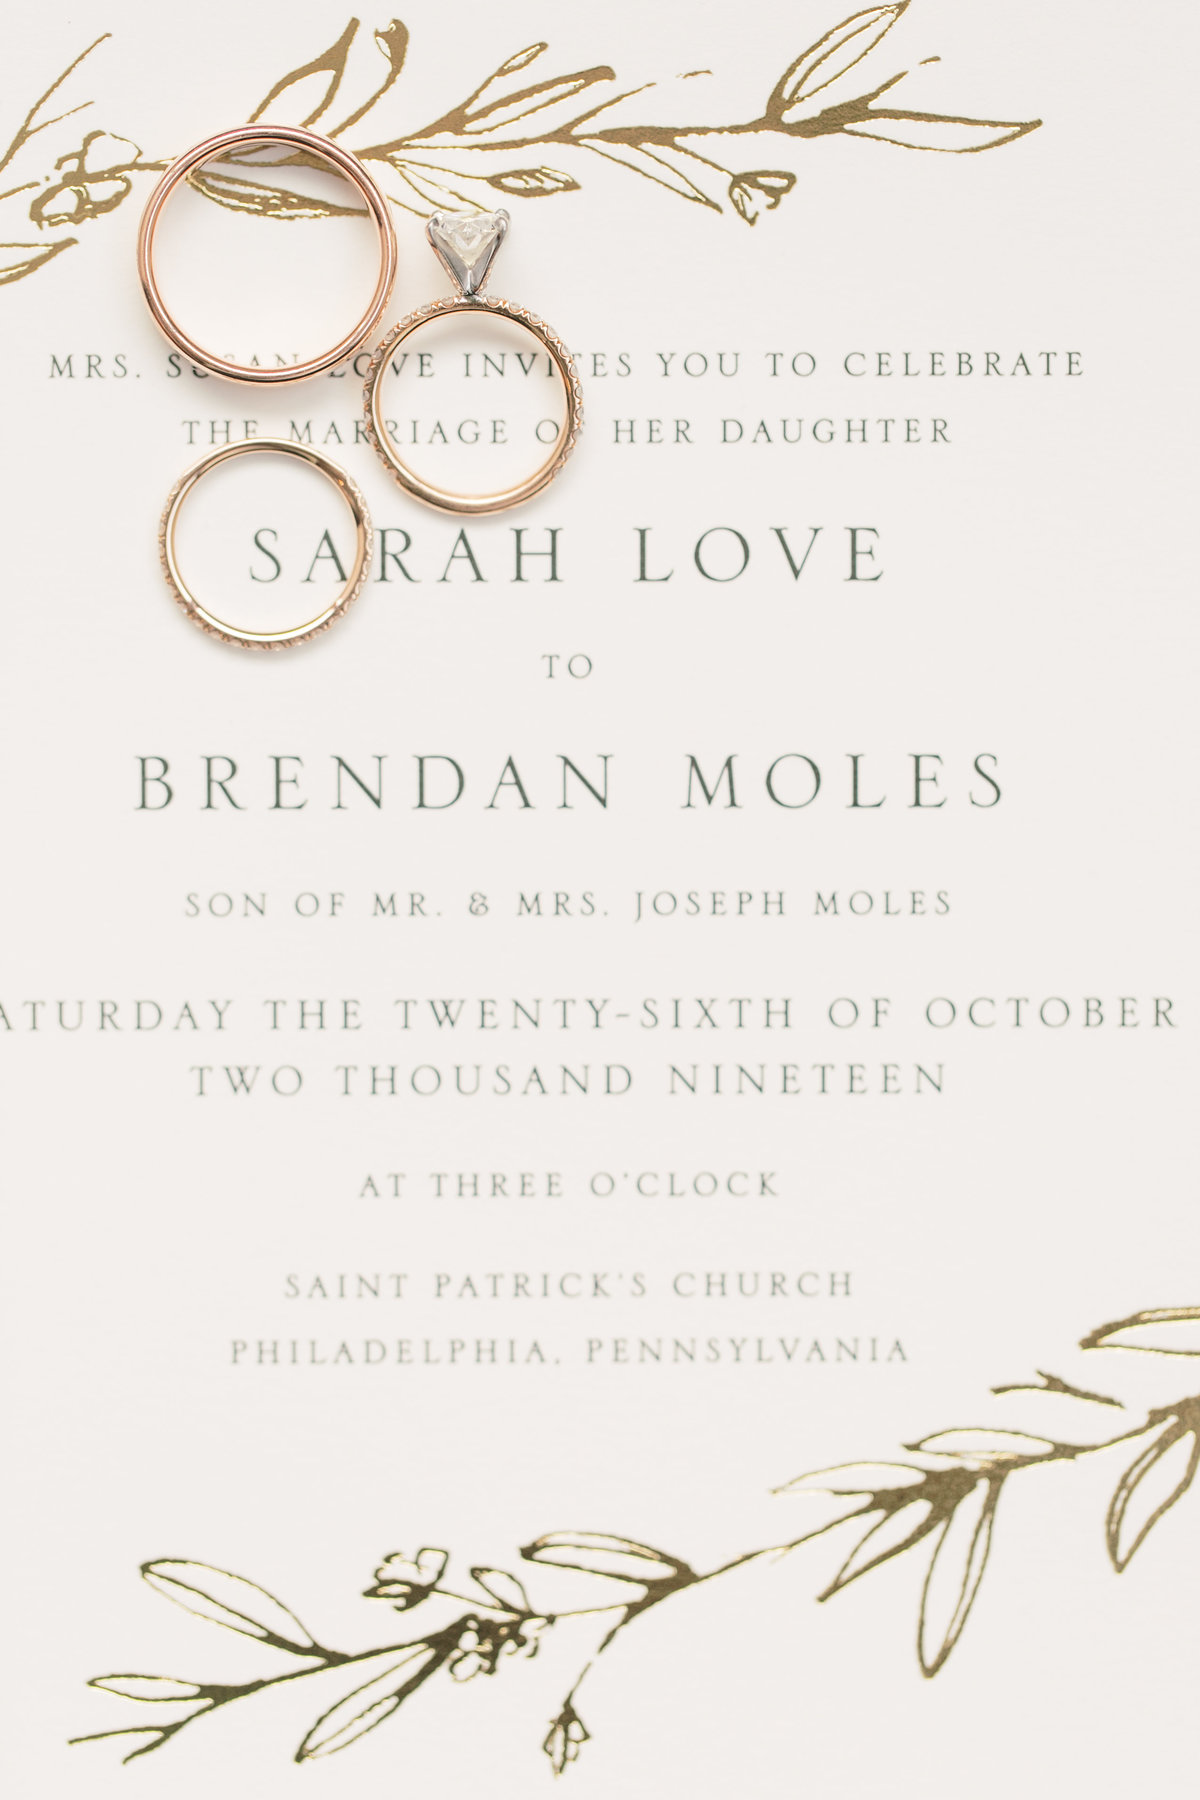 cream wedding invitation with greenery and wedding rings